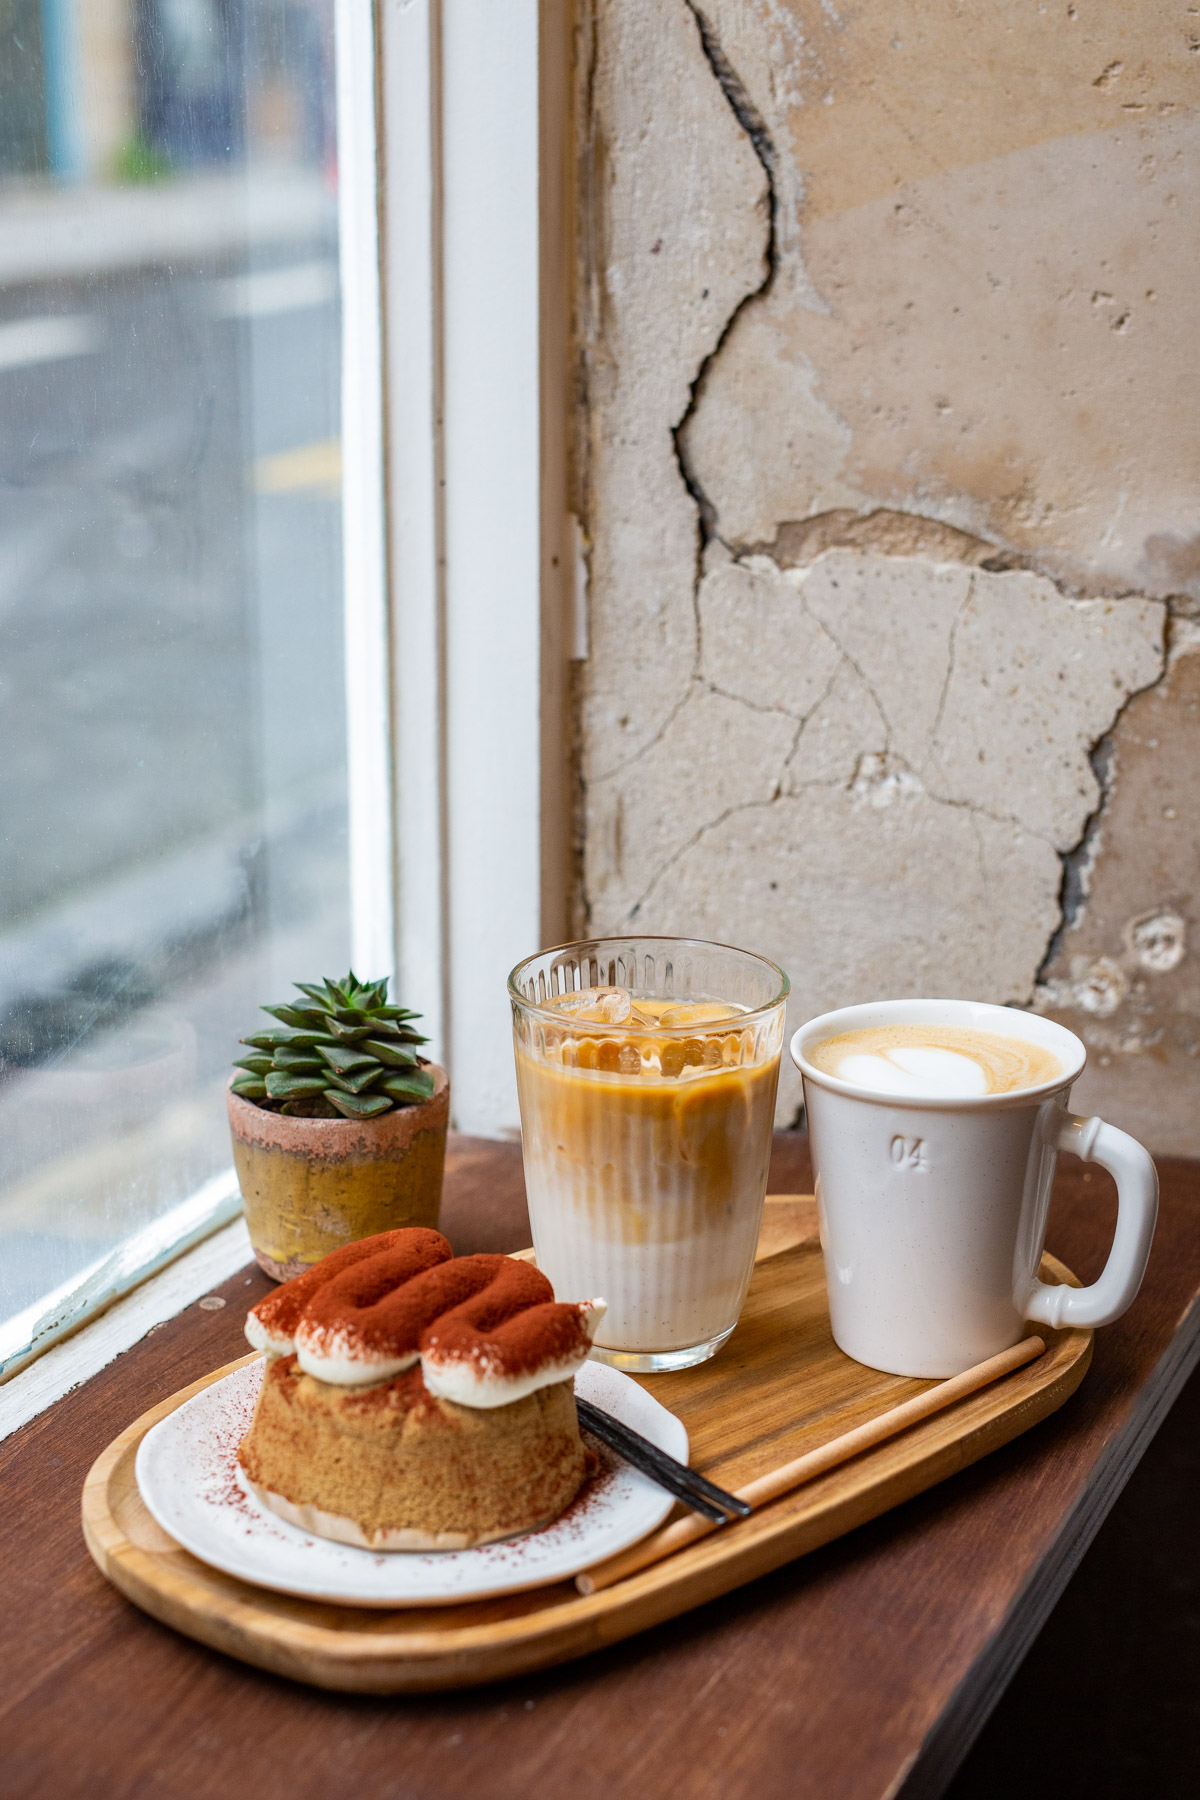 Cafe Jirisan Tiramisu Cheesecake, Iced Coffee and Cappuccino 
Best Cafes in Paris